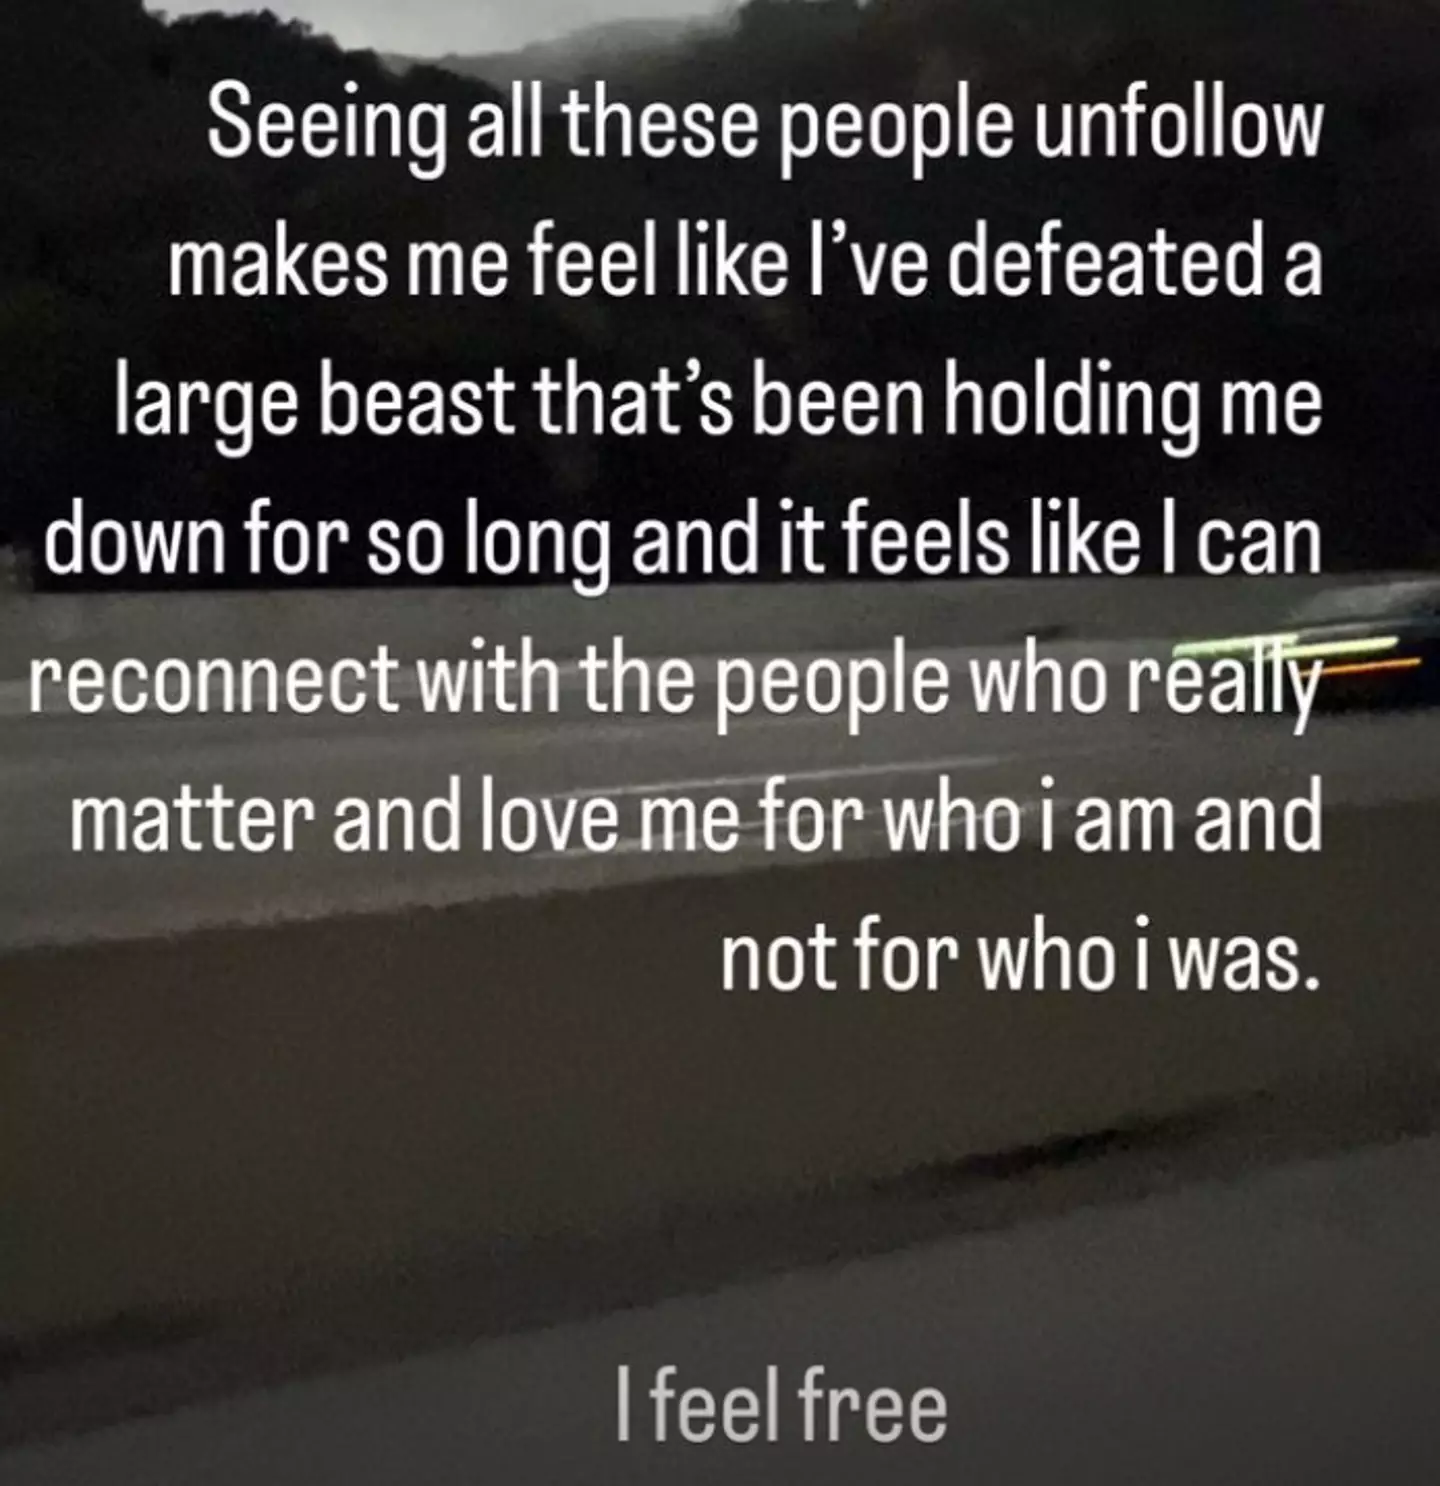 Doja Cat responded to her follower loss on Instagram.